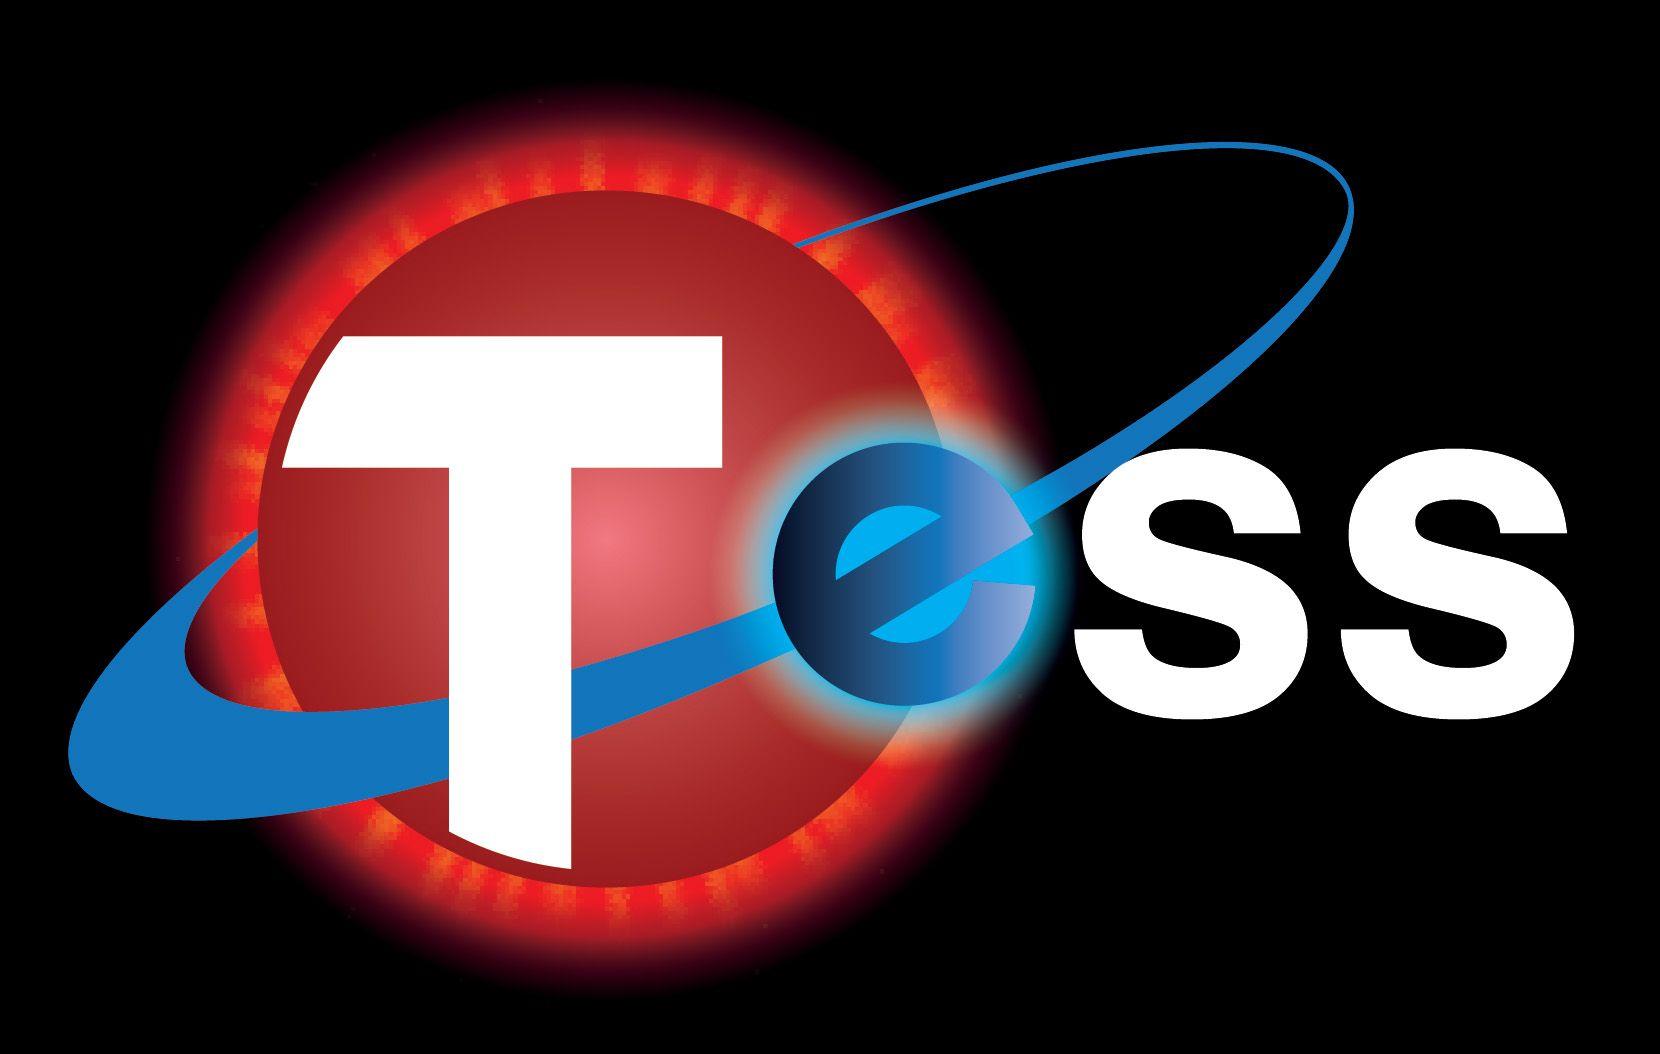 NASA High Resolution Logo - TESS logo (black bg)